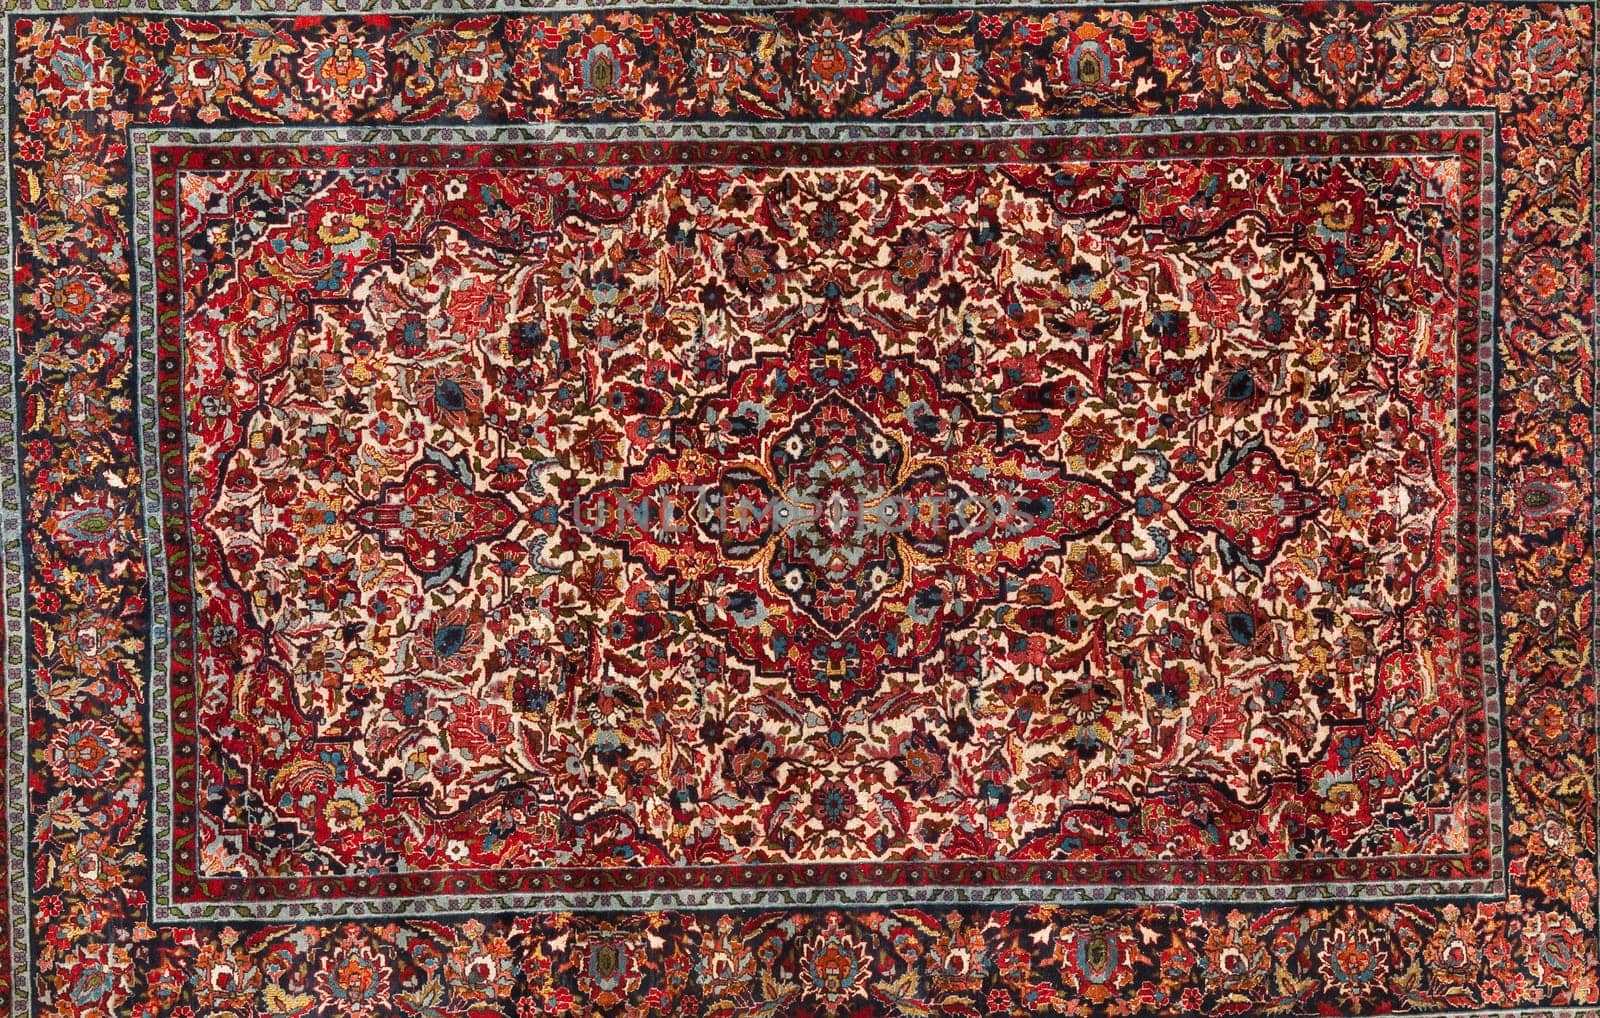 Turkish Carpet. High quality photo